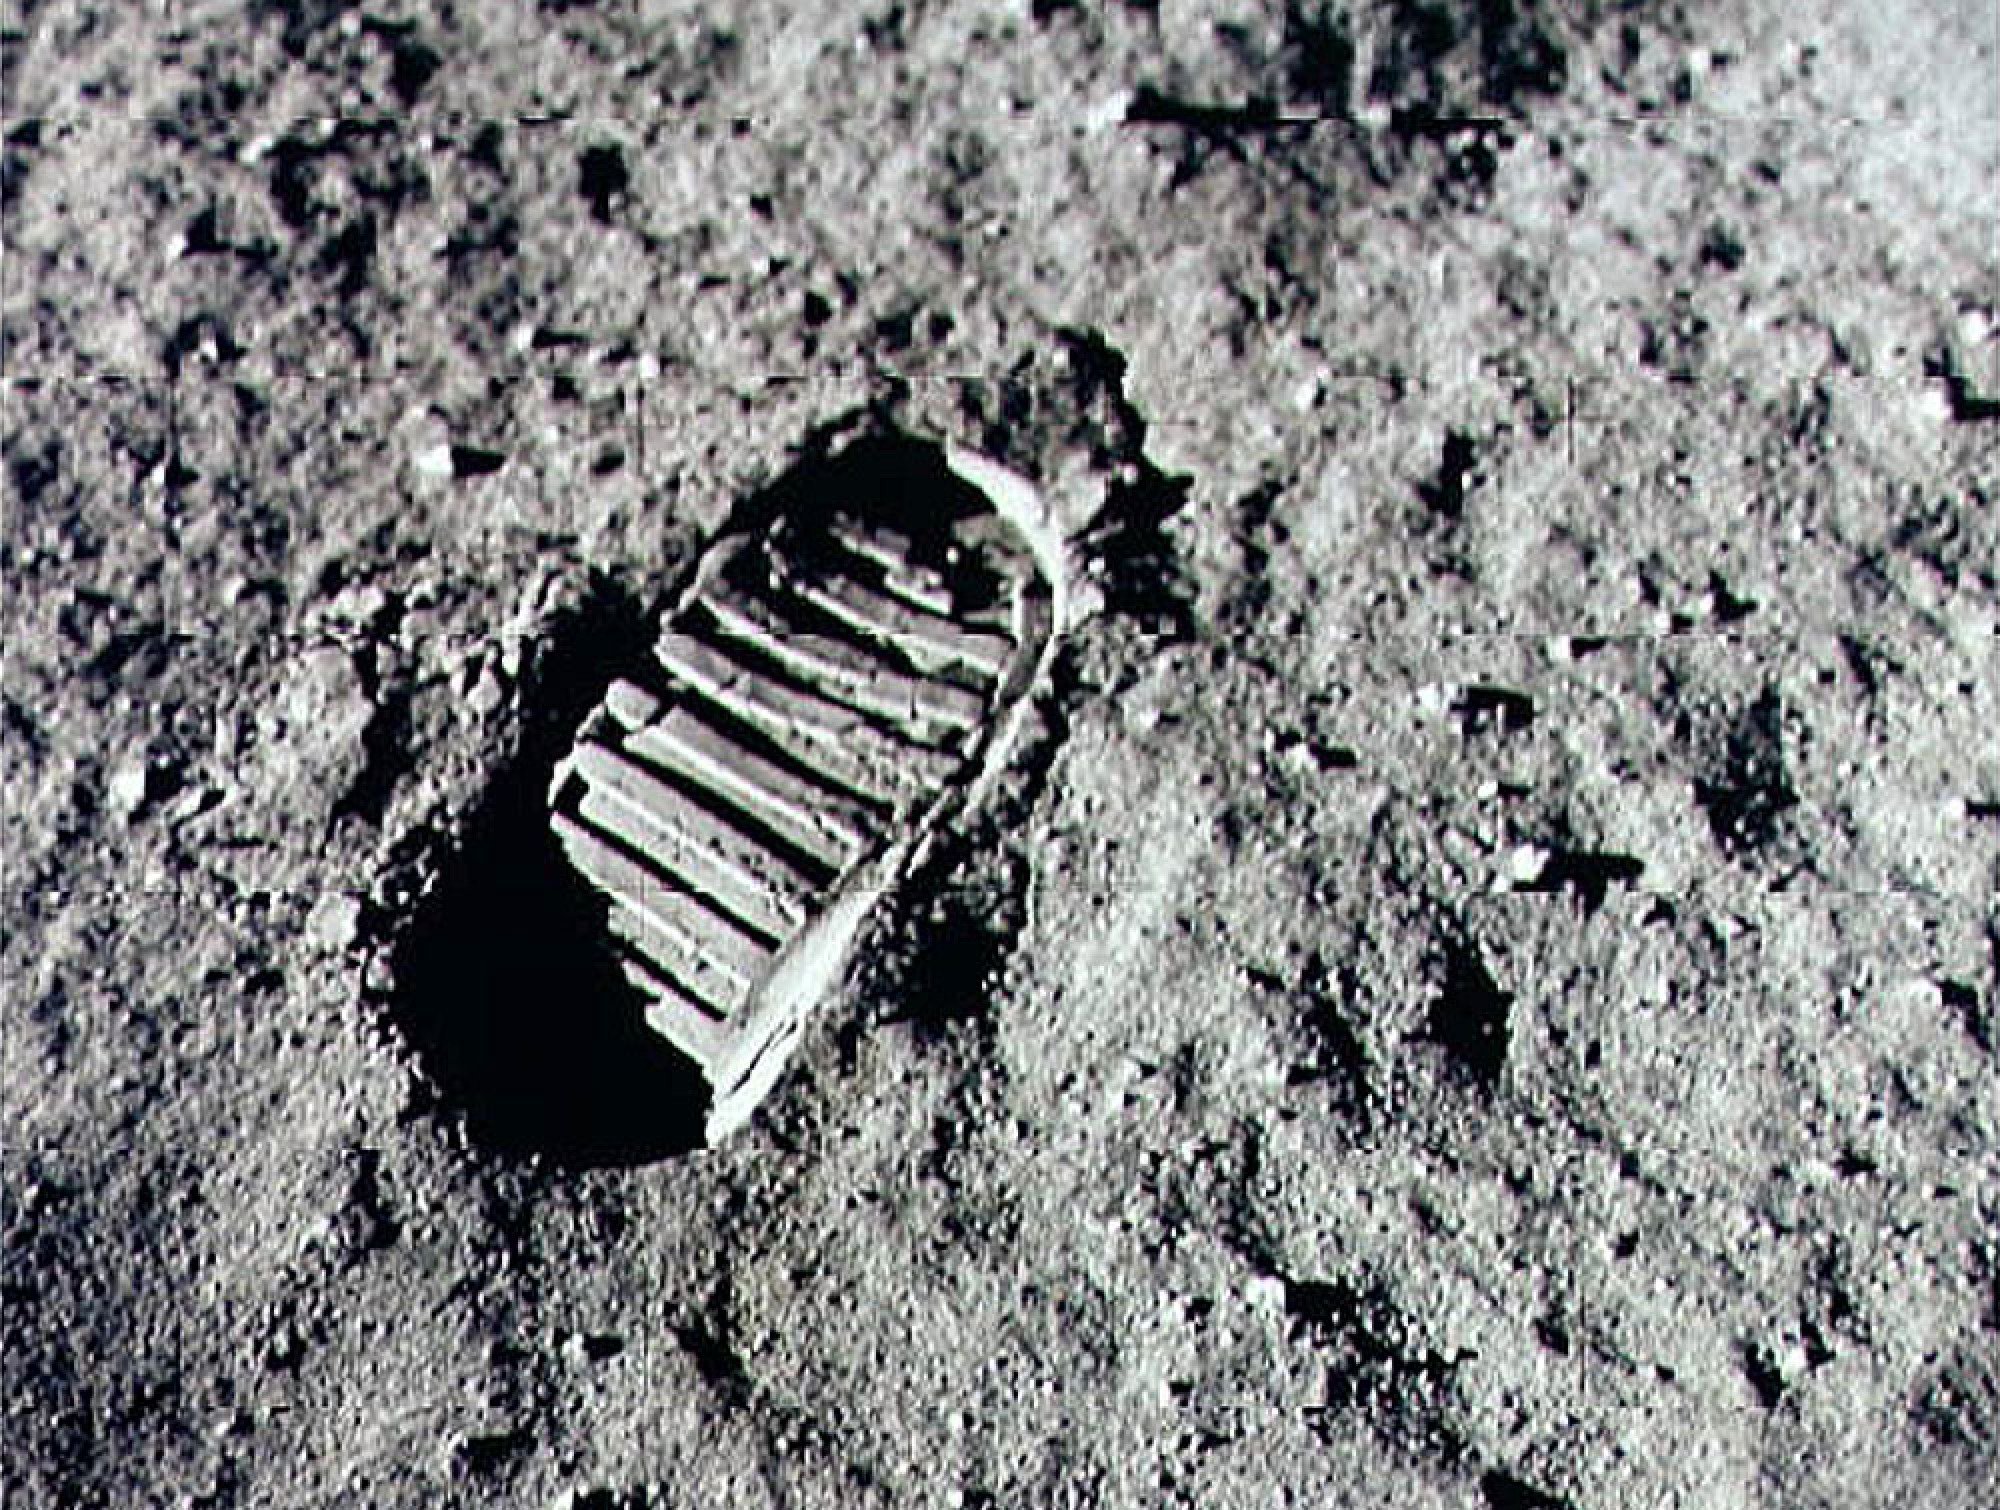 Astronaut boot print on the moon